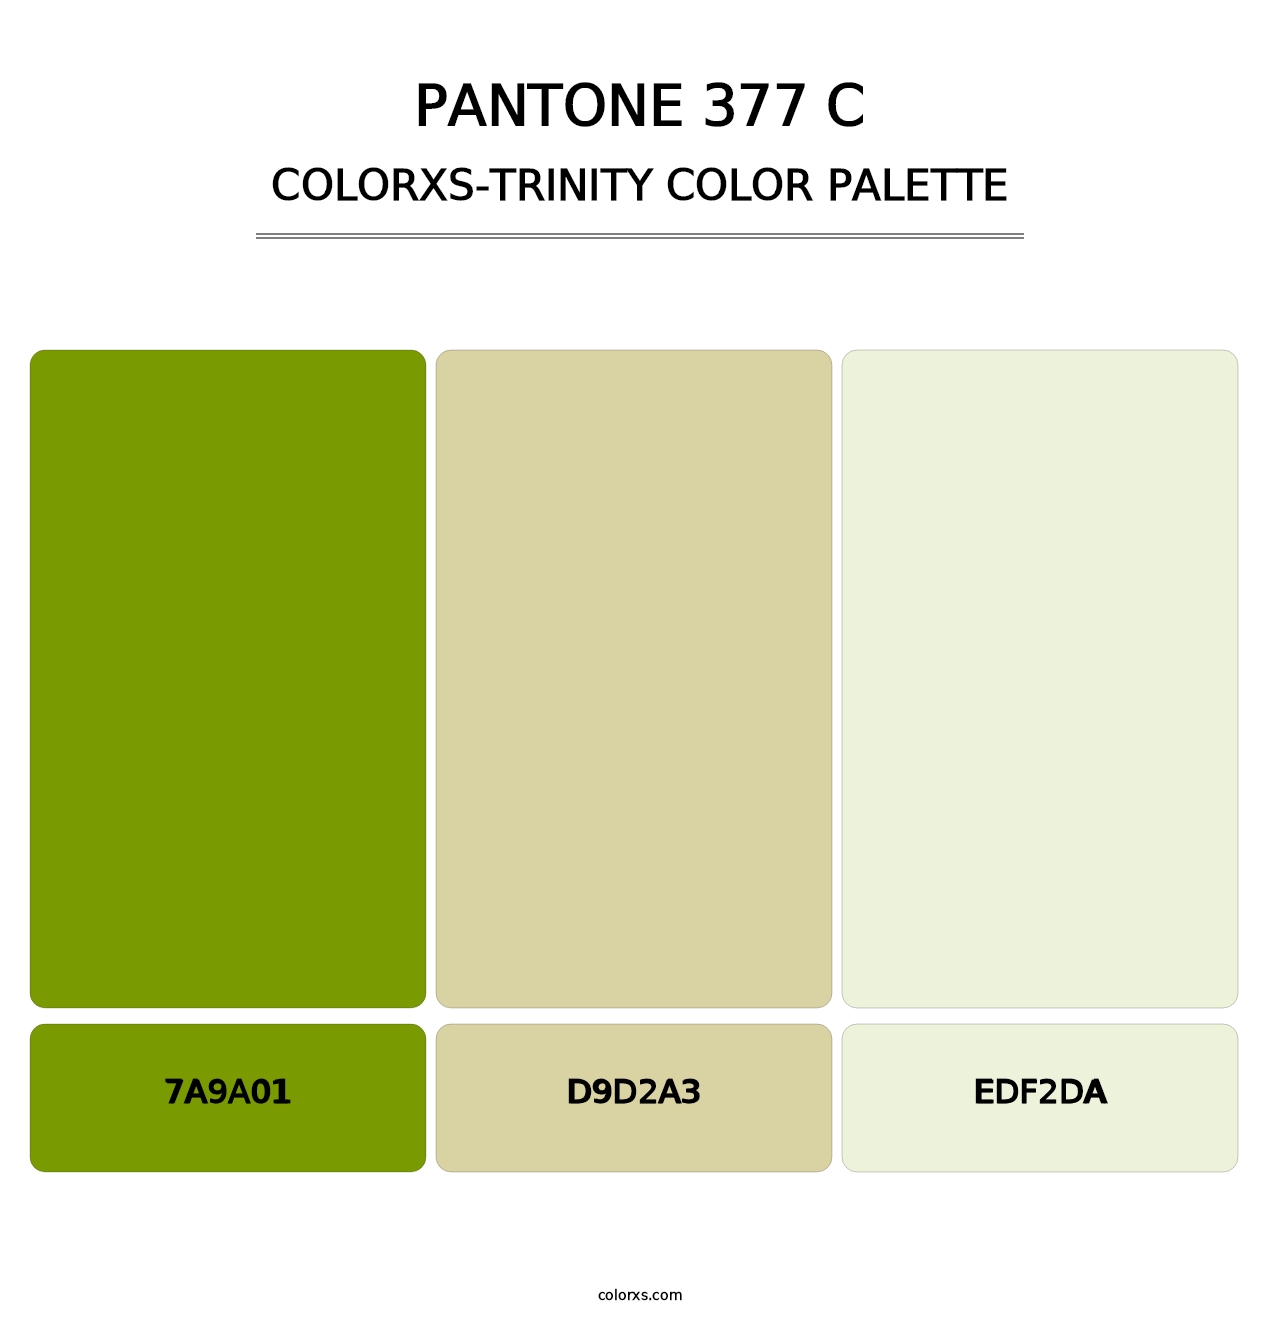 PANTONE 377 C - Colorxs Trinity Palette